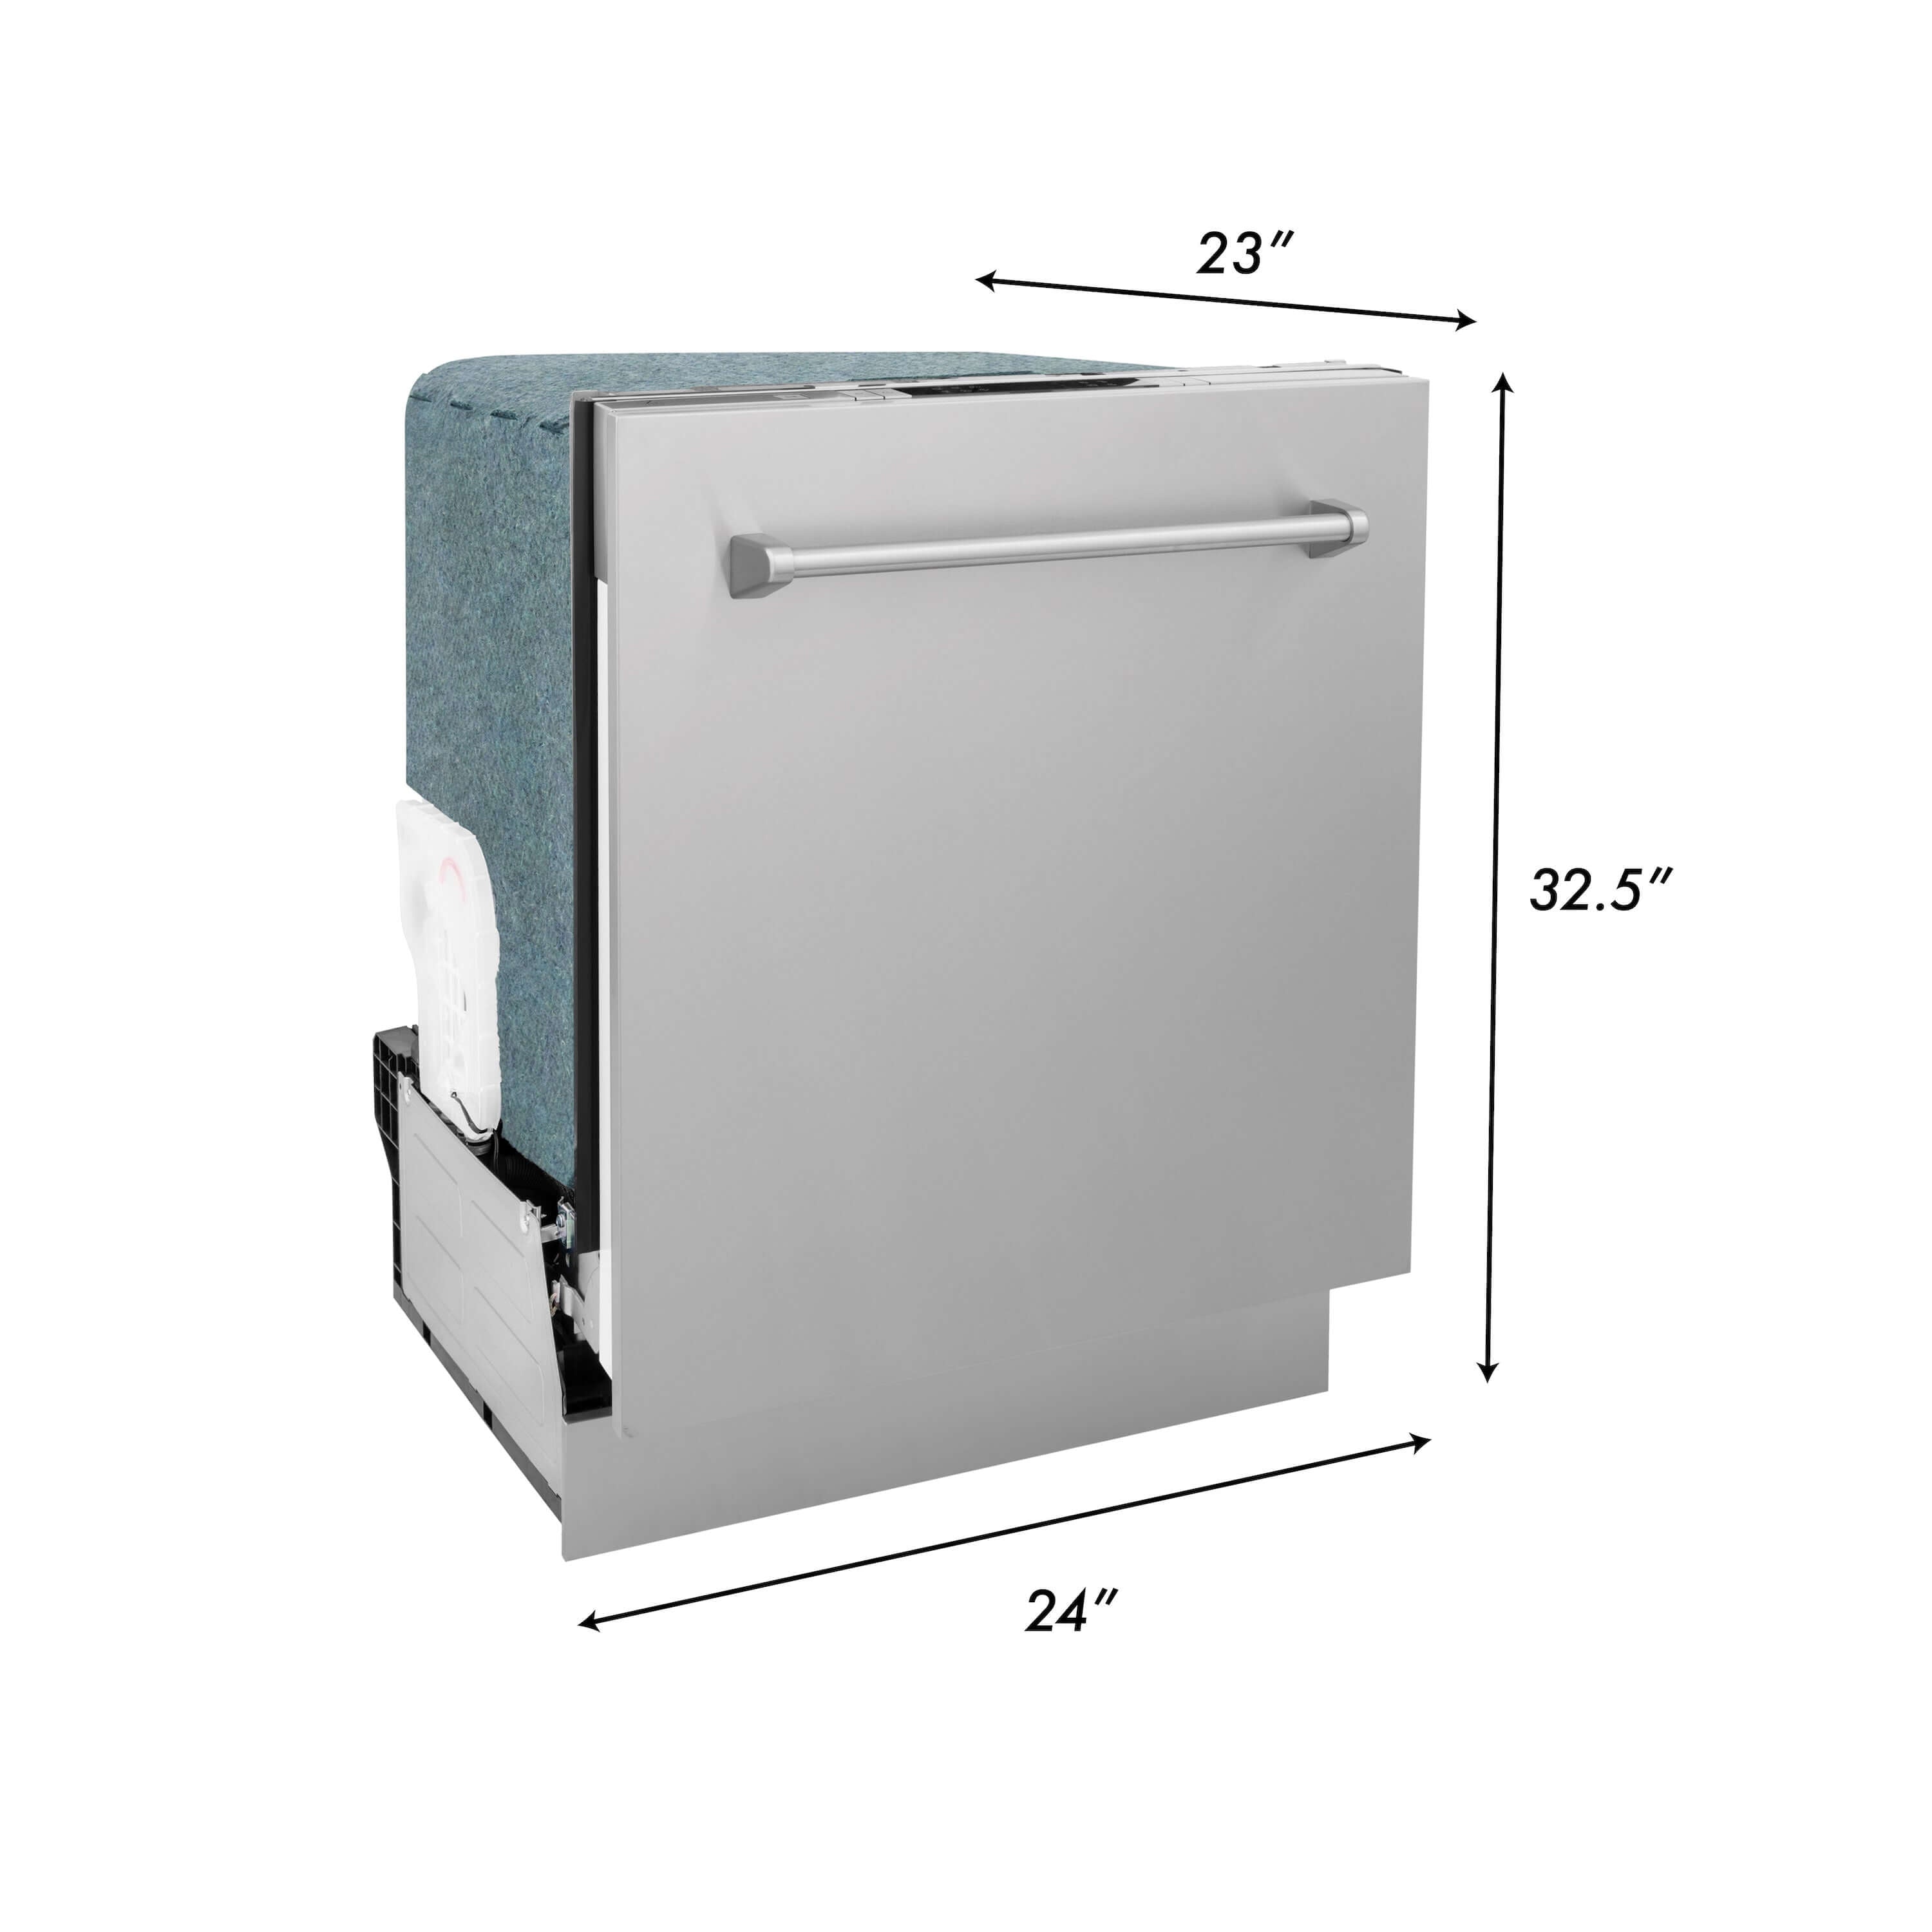 ZLINE 24-inch dishwasher dimensional diagram with measurements.